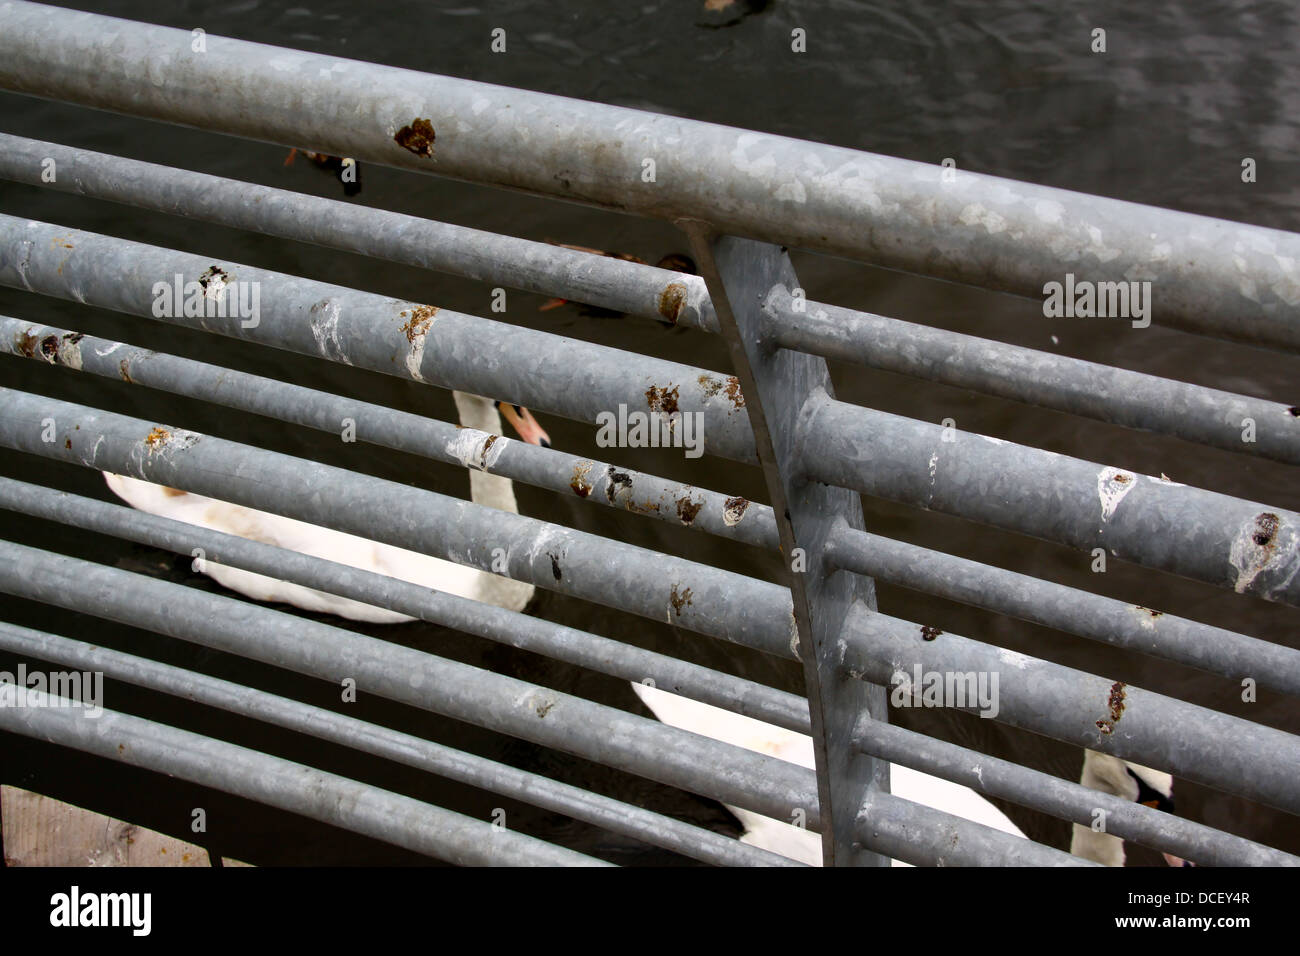 Galvanised railing covered in bird feces Stock Photo